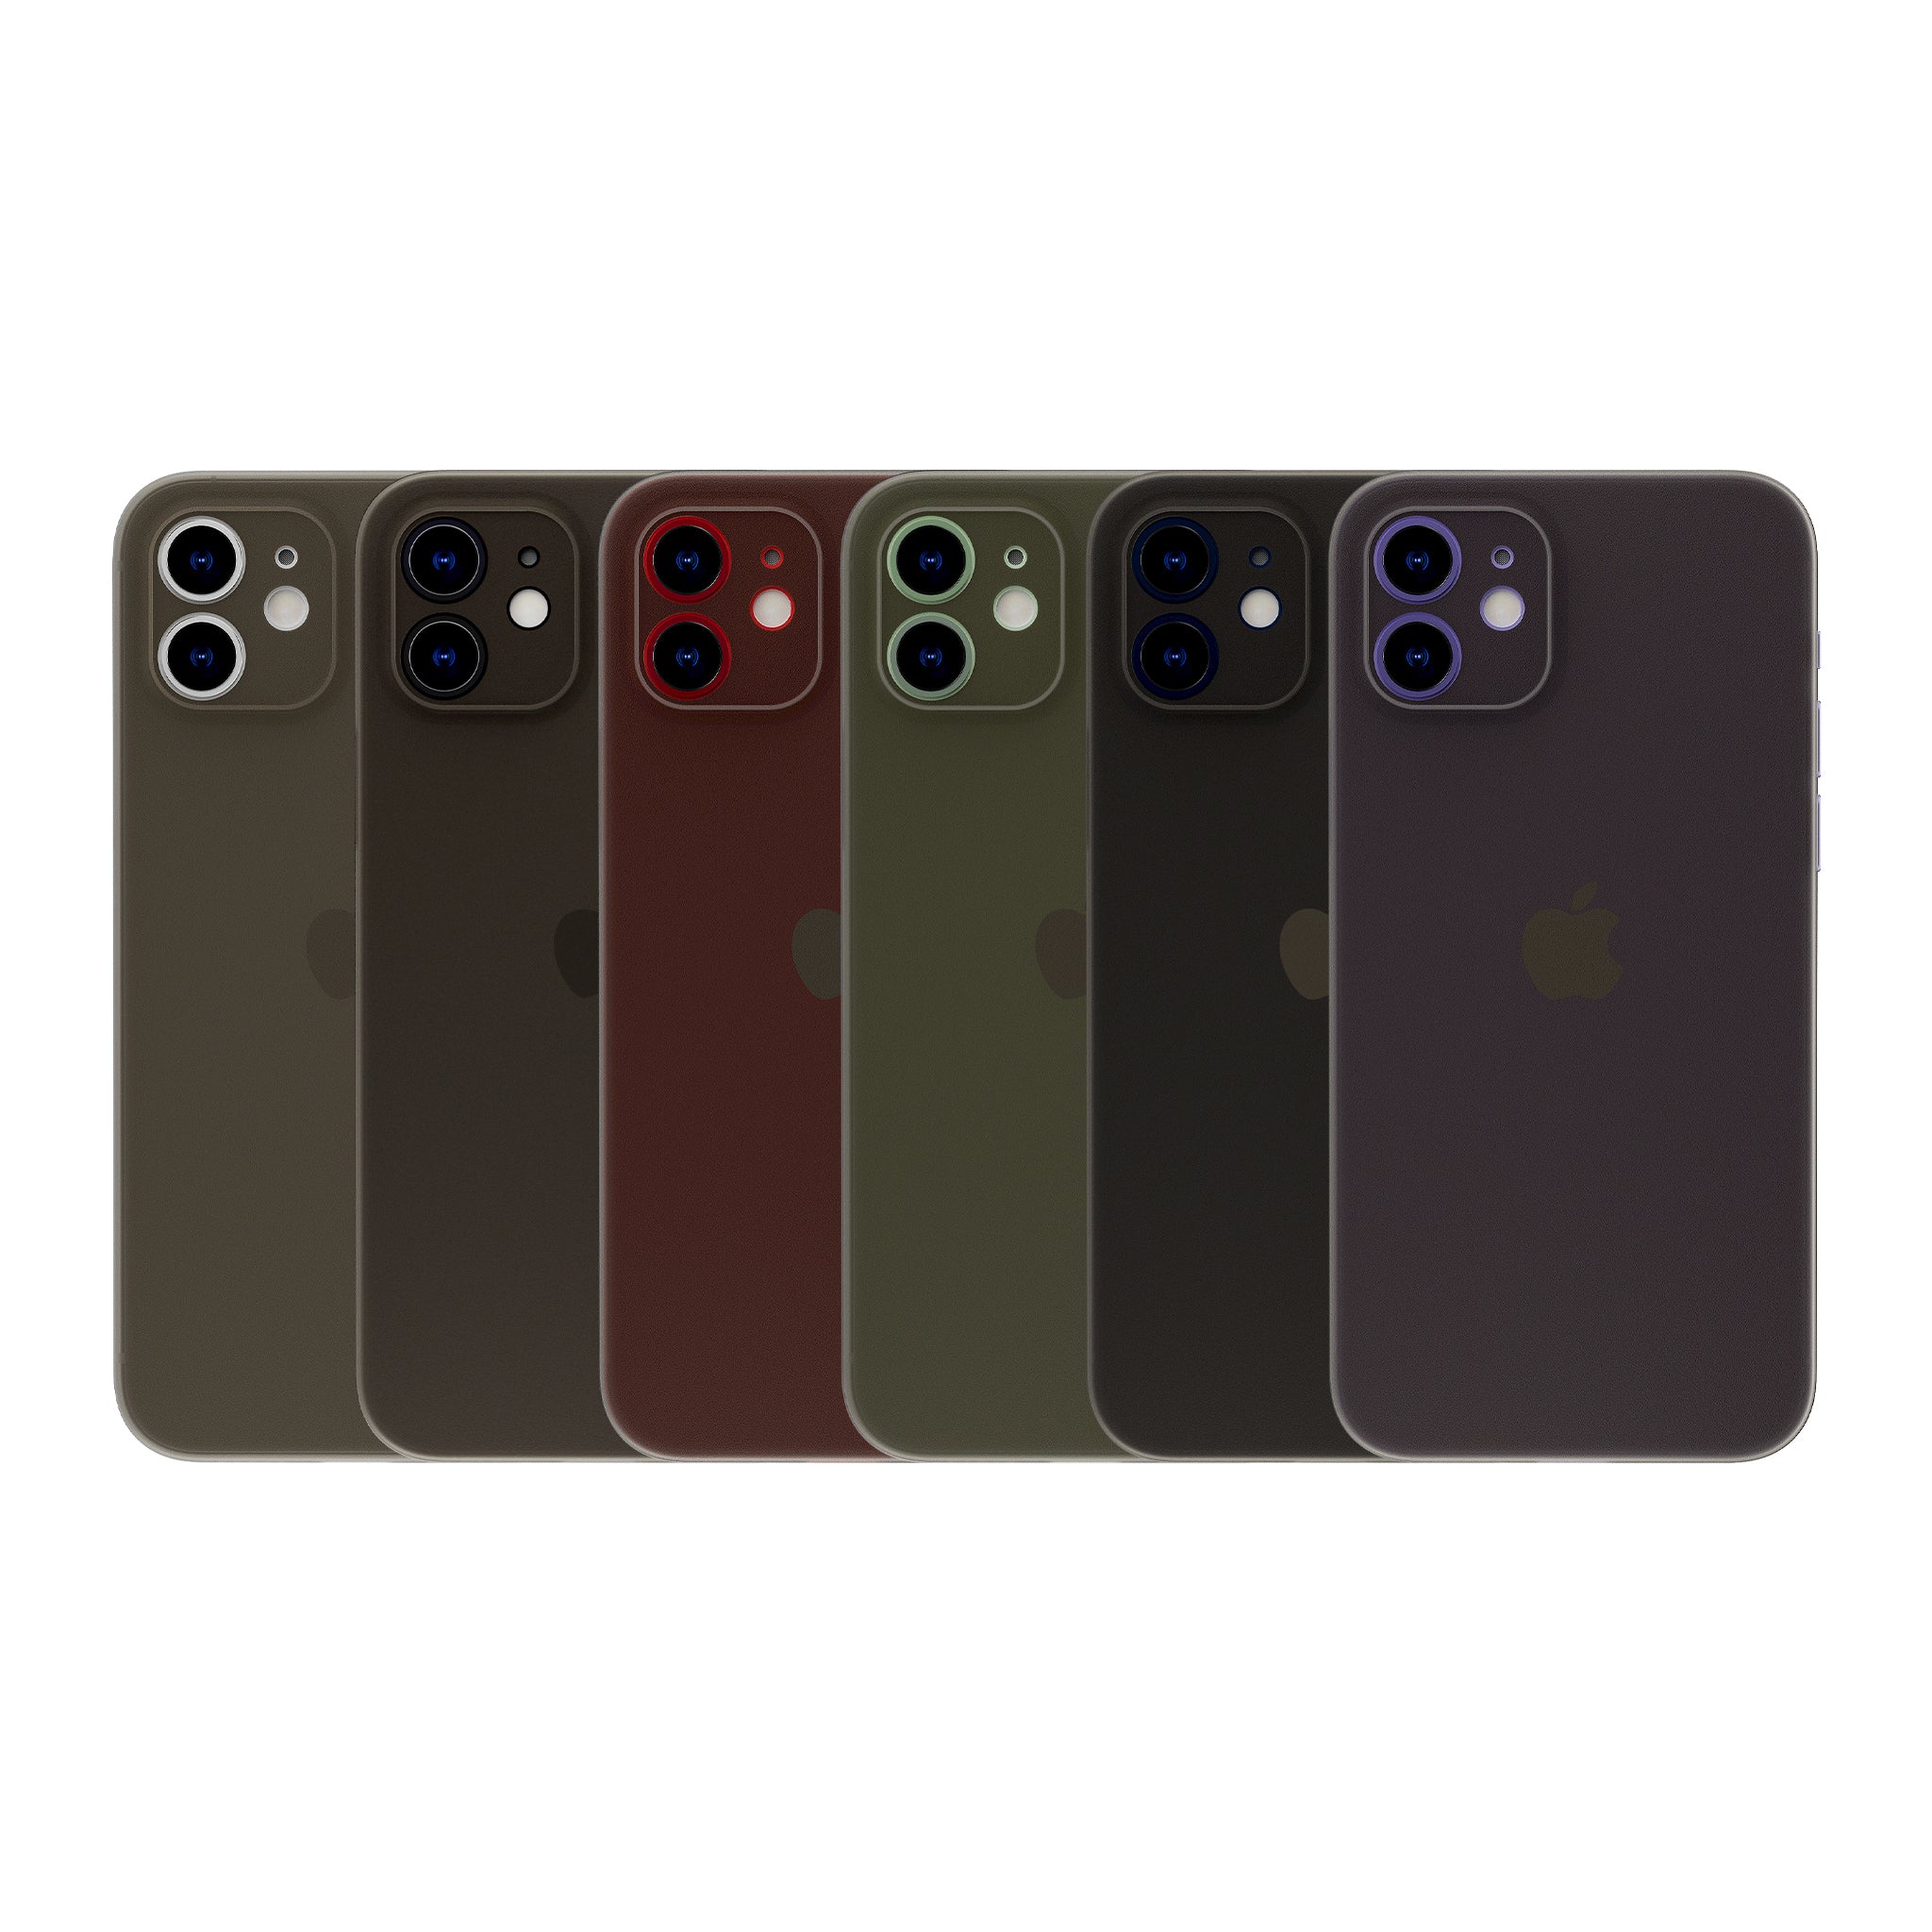 iphone 12 cases, iphone 12 case, slimcase iphone 12, iphone 12 slimcase